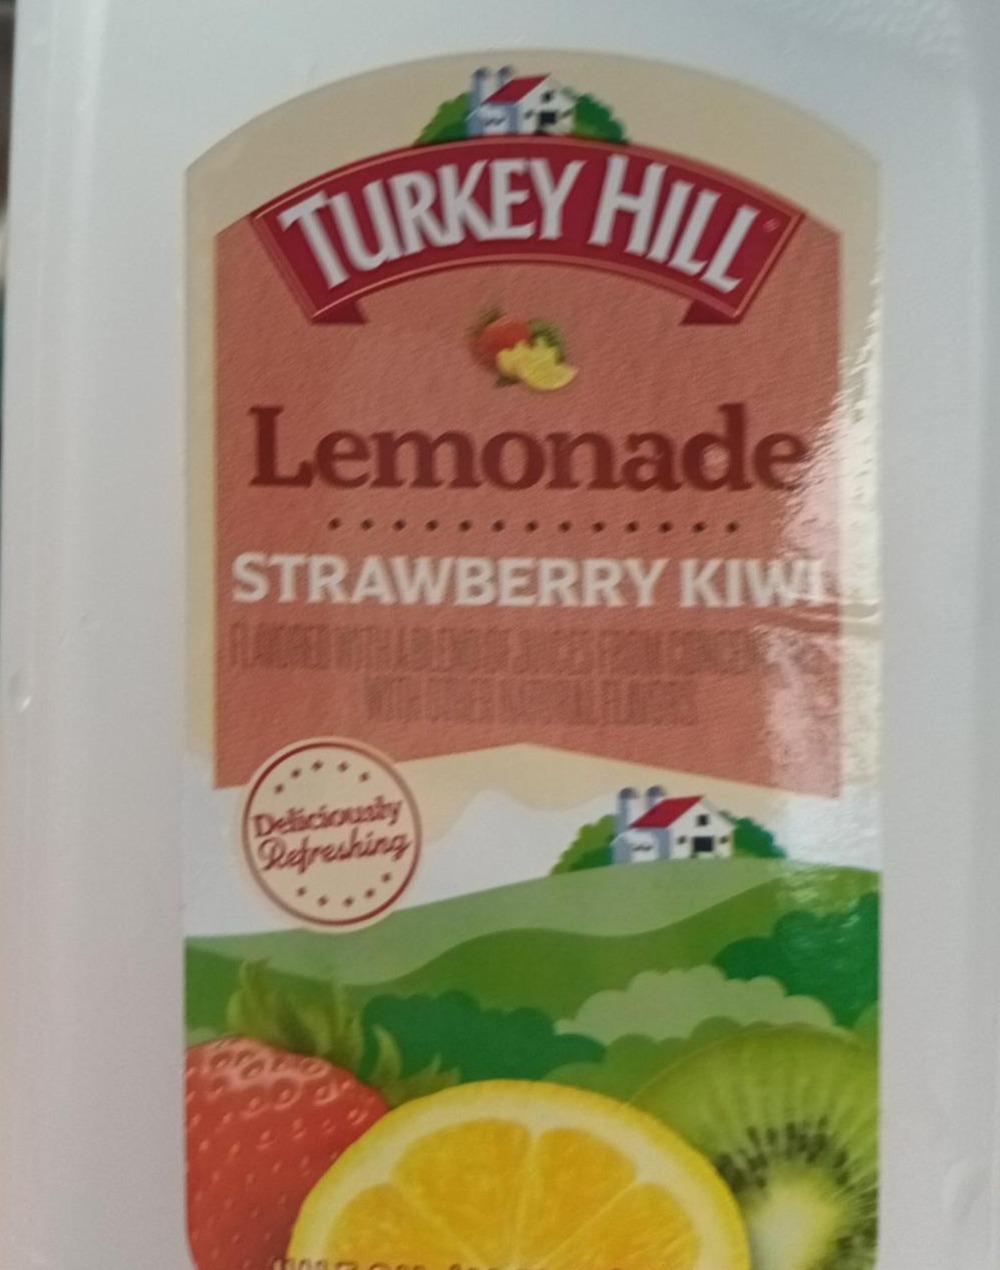 Fotografie - Lemonade strawberry kiwi Turkey Hill